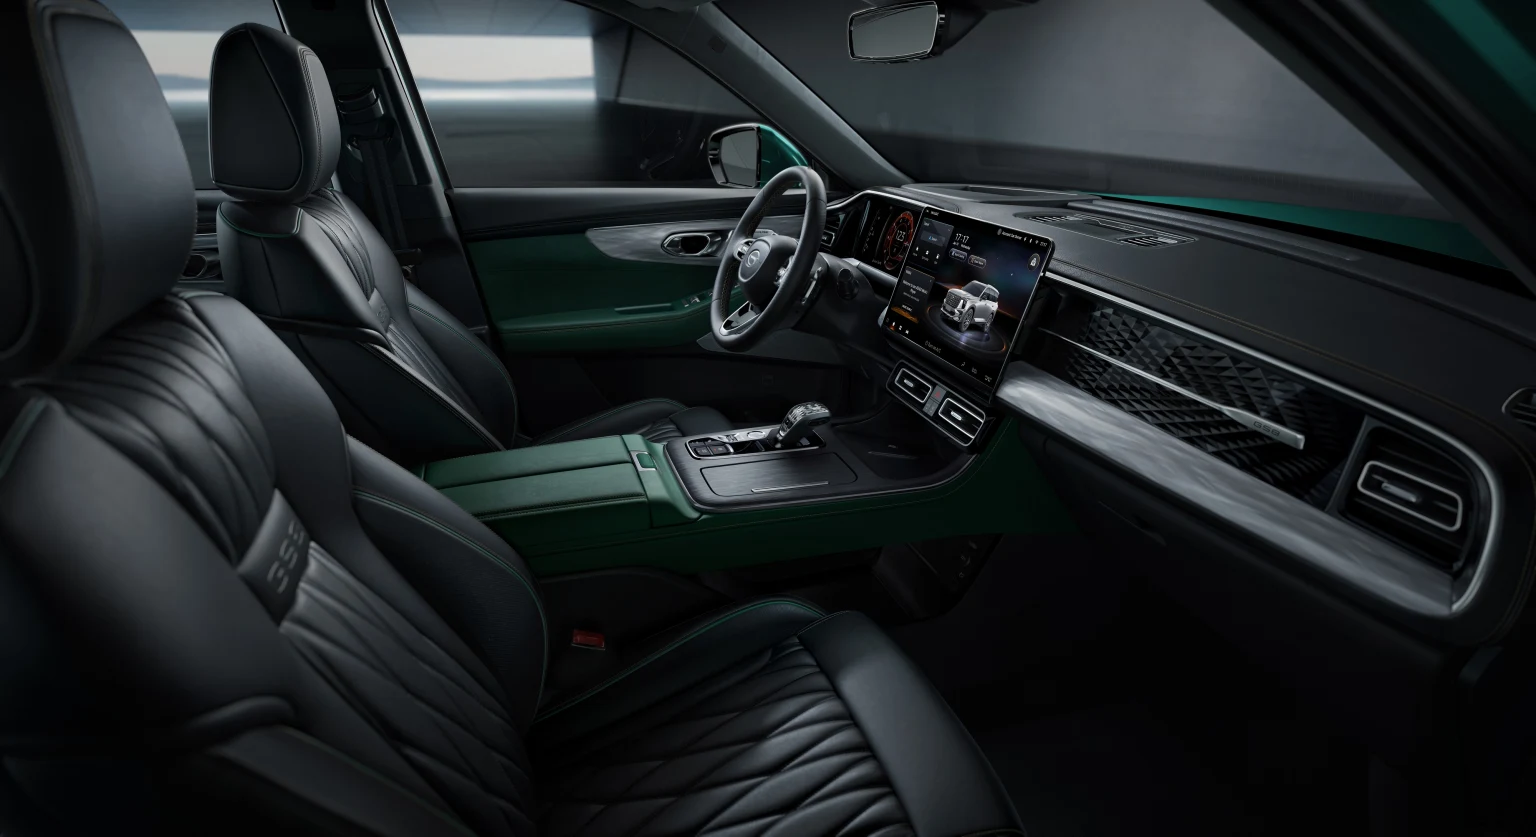 GAC GS8 interior - Front Seats